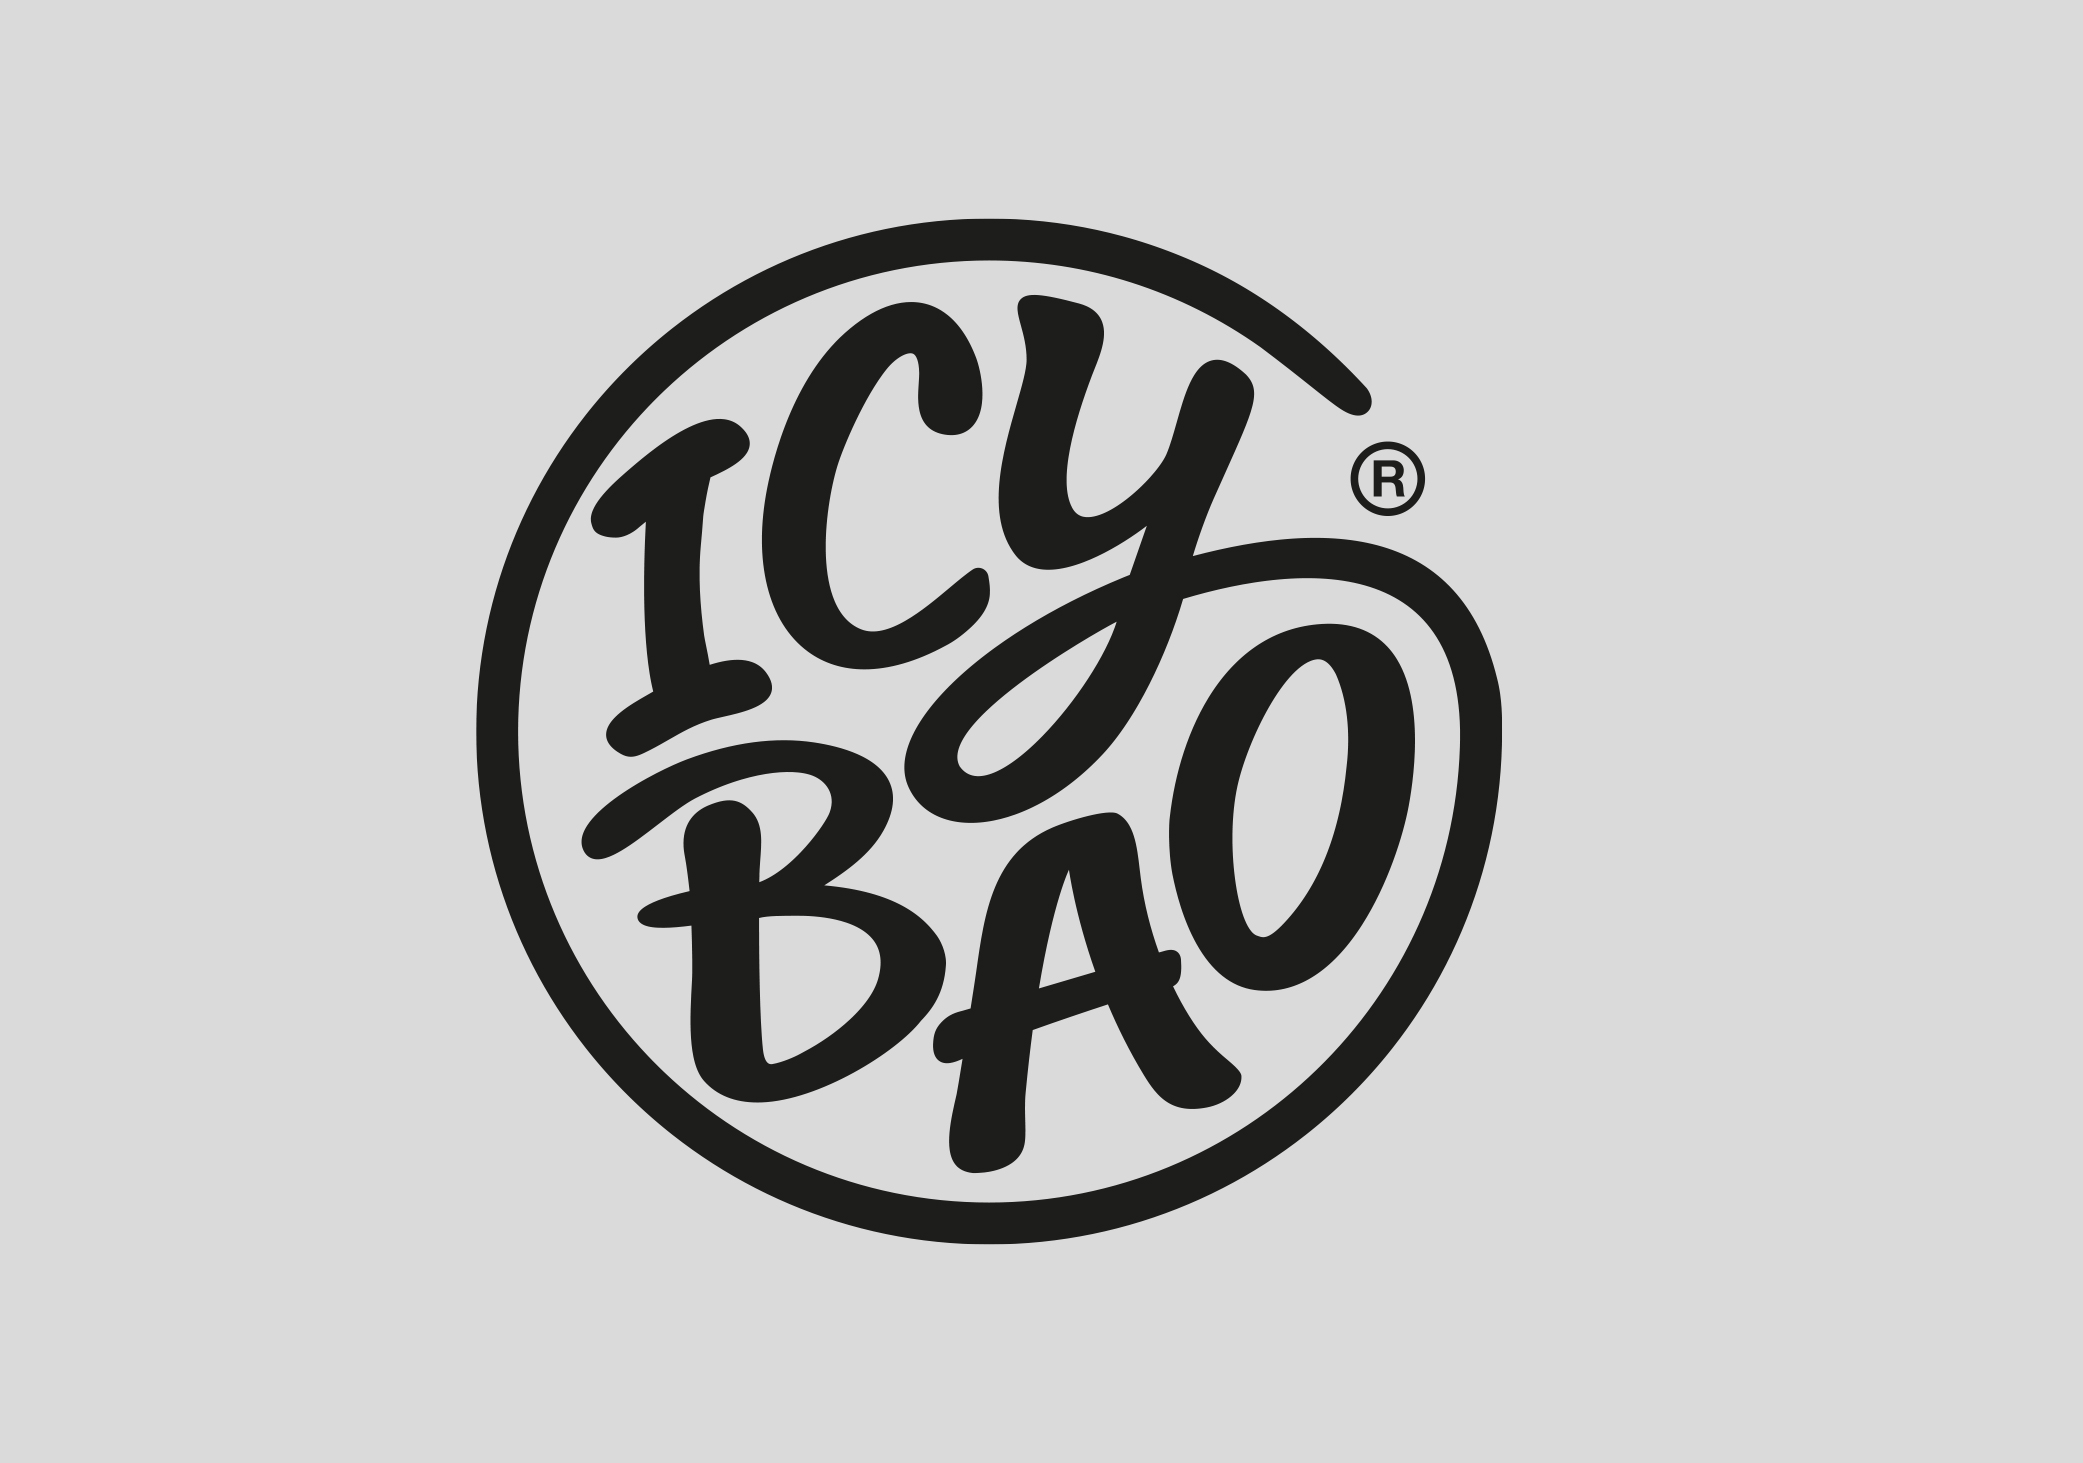 Icy Bao logo design